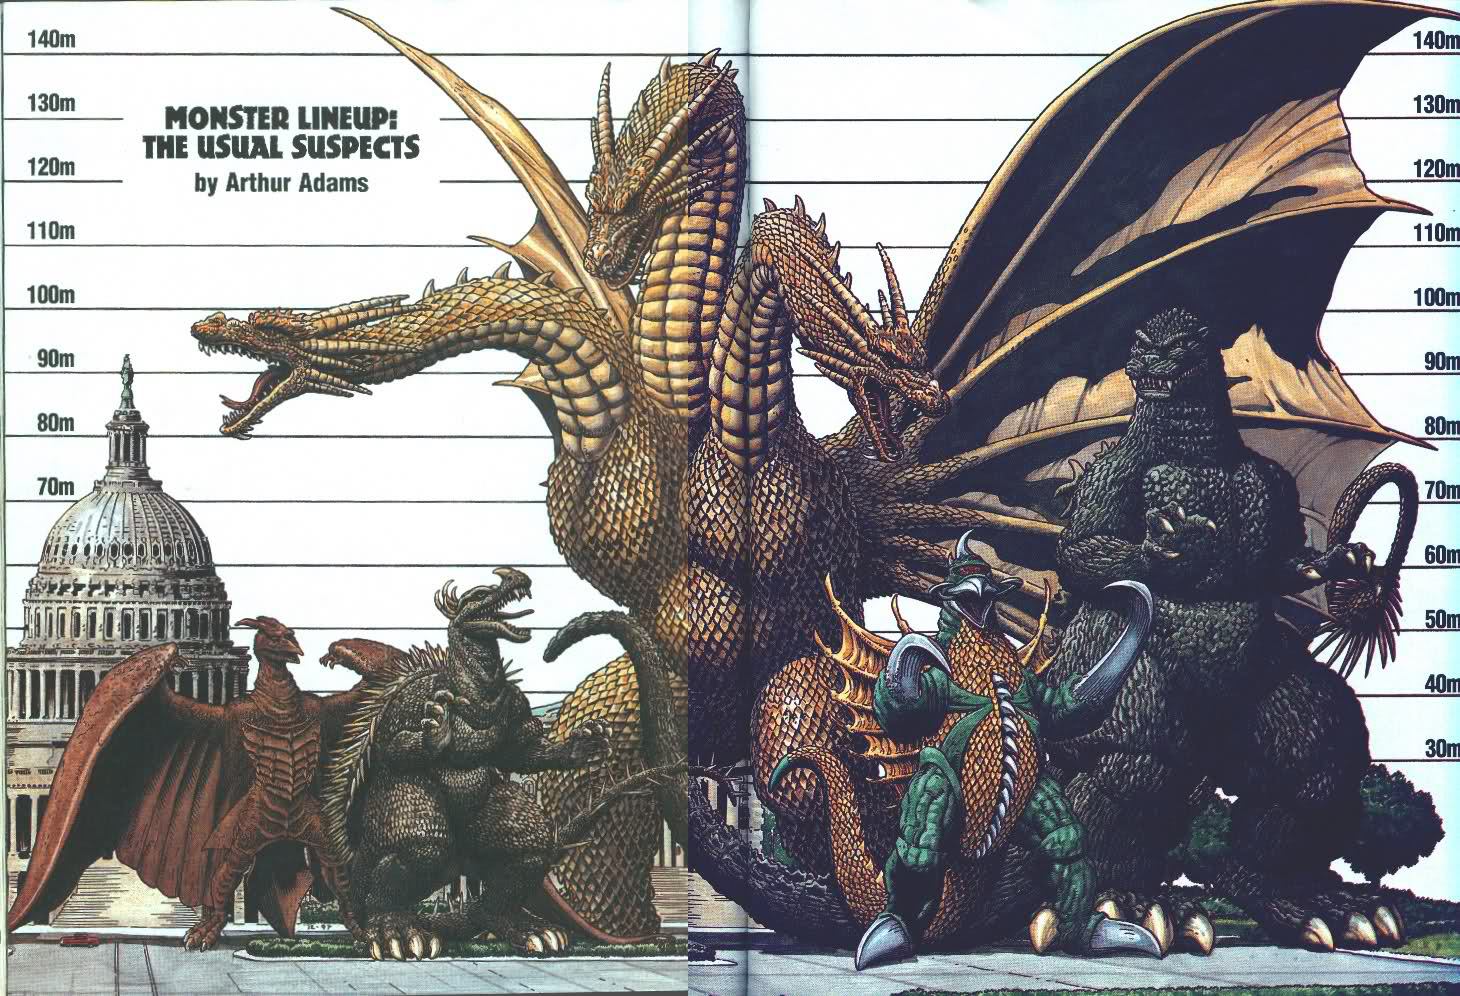 50+] Godzilla Desktop Wallpaper - WallpaperSafari